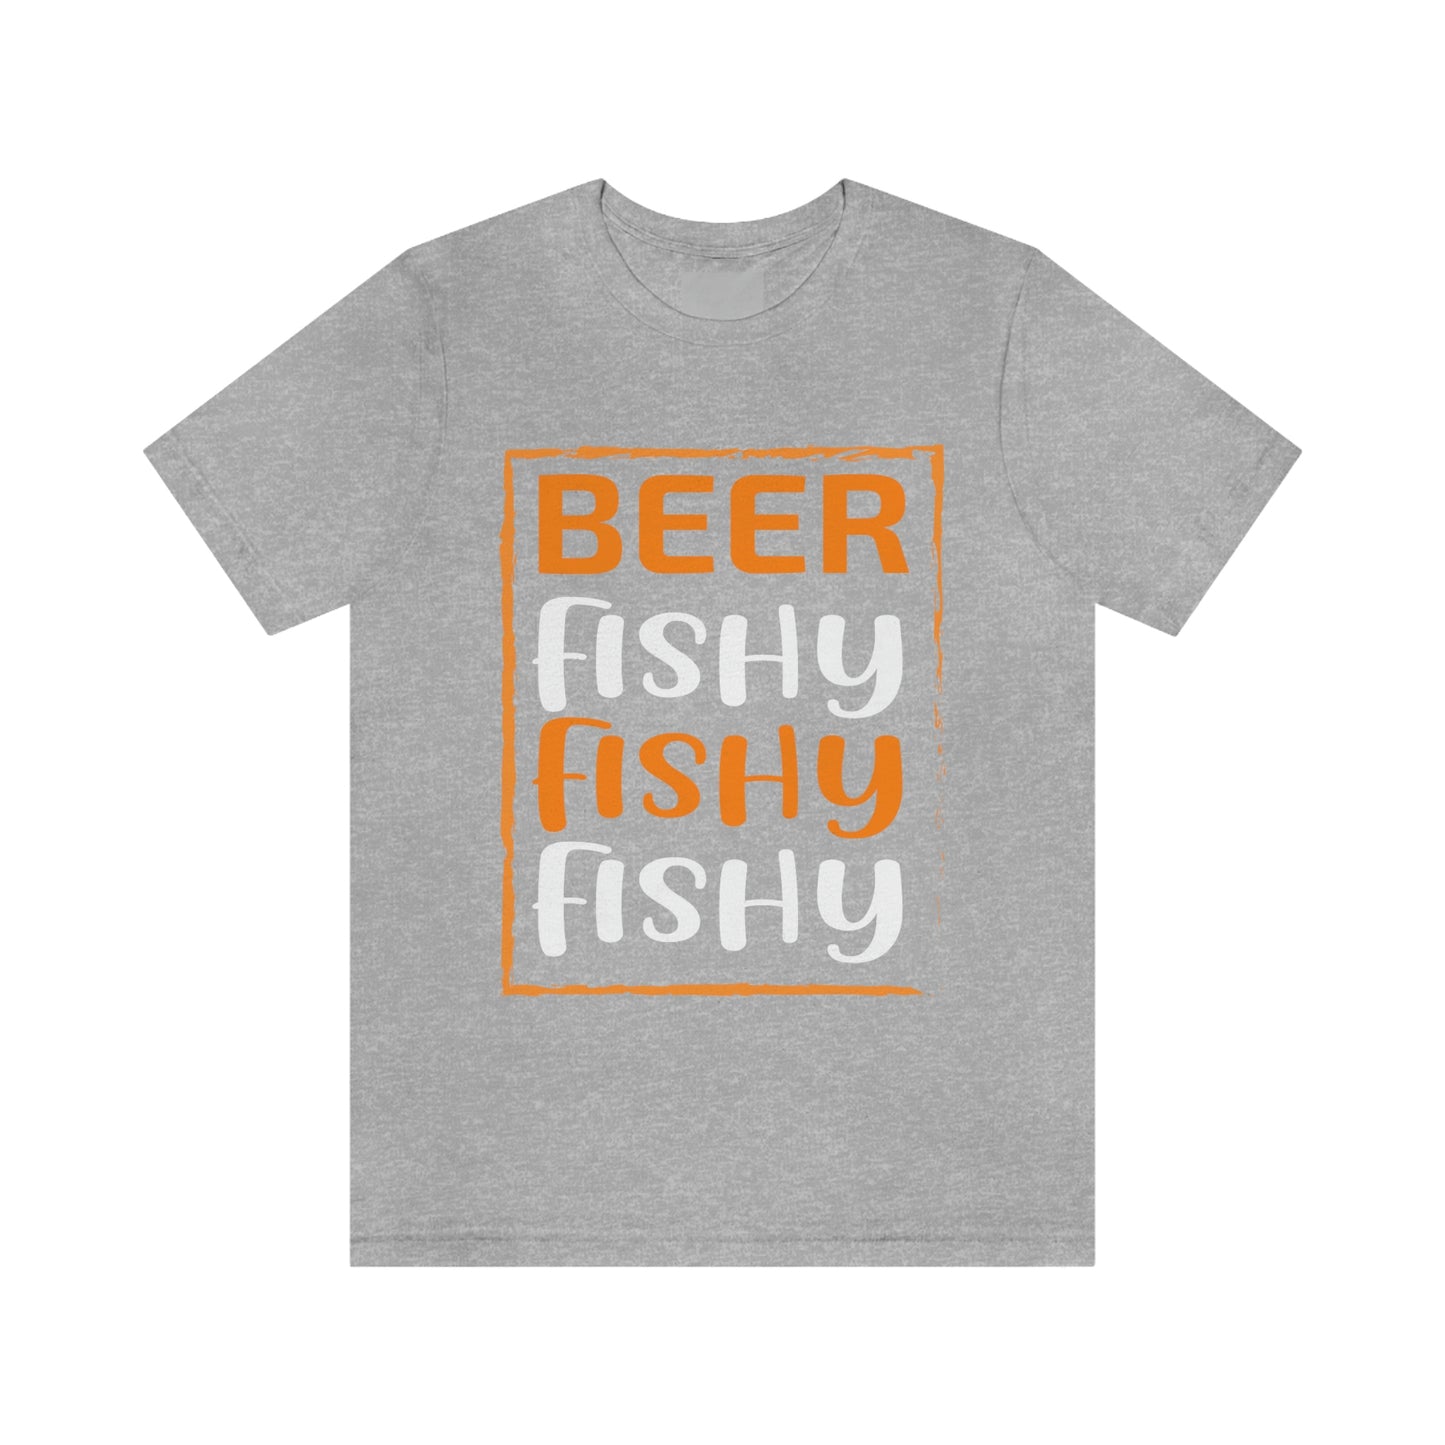 Beer Fishy Fishy Fishy - Unisex T-Shirt